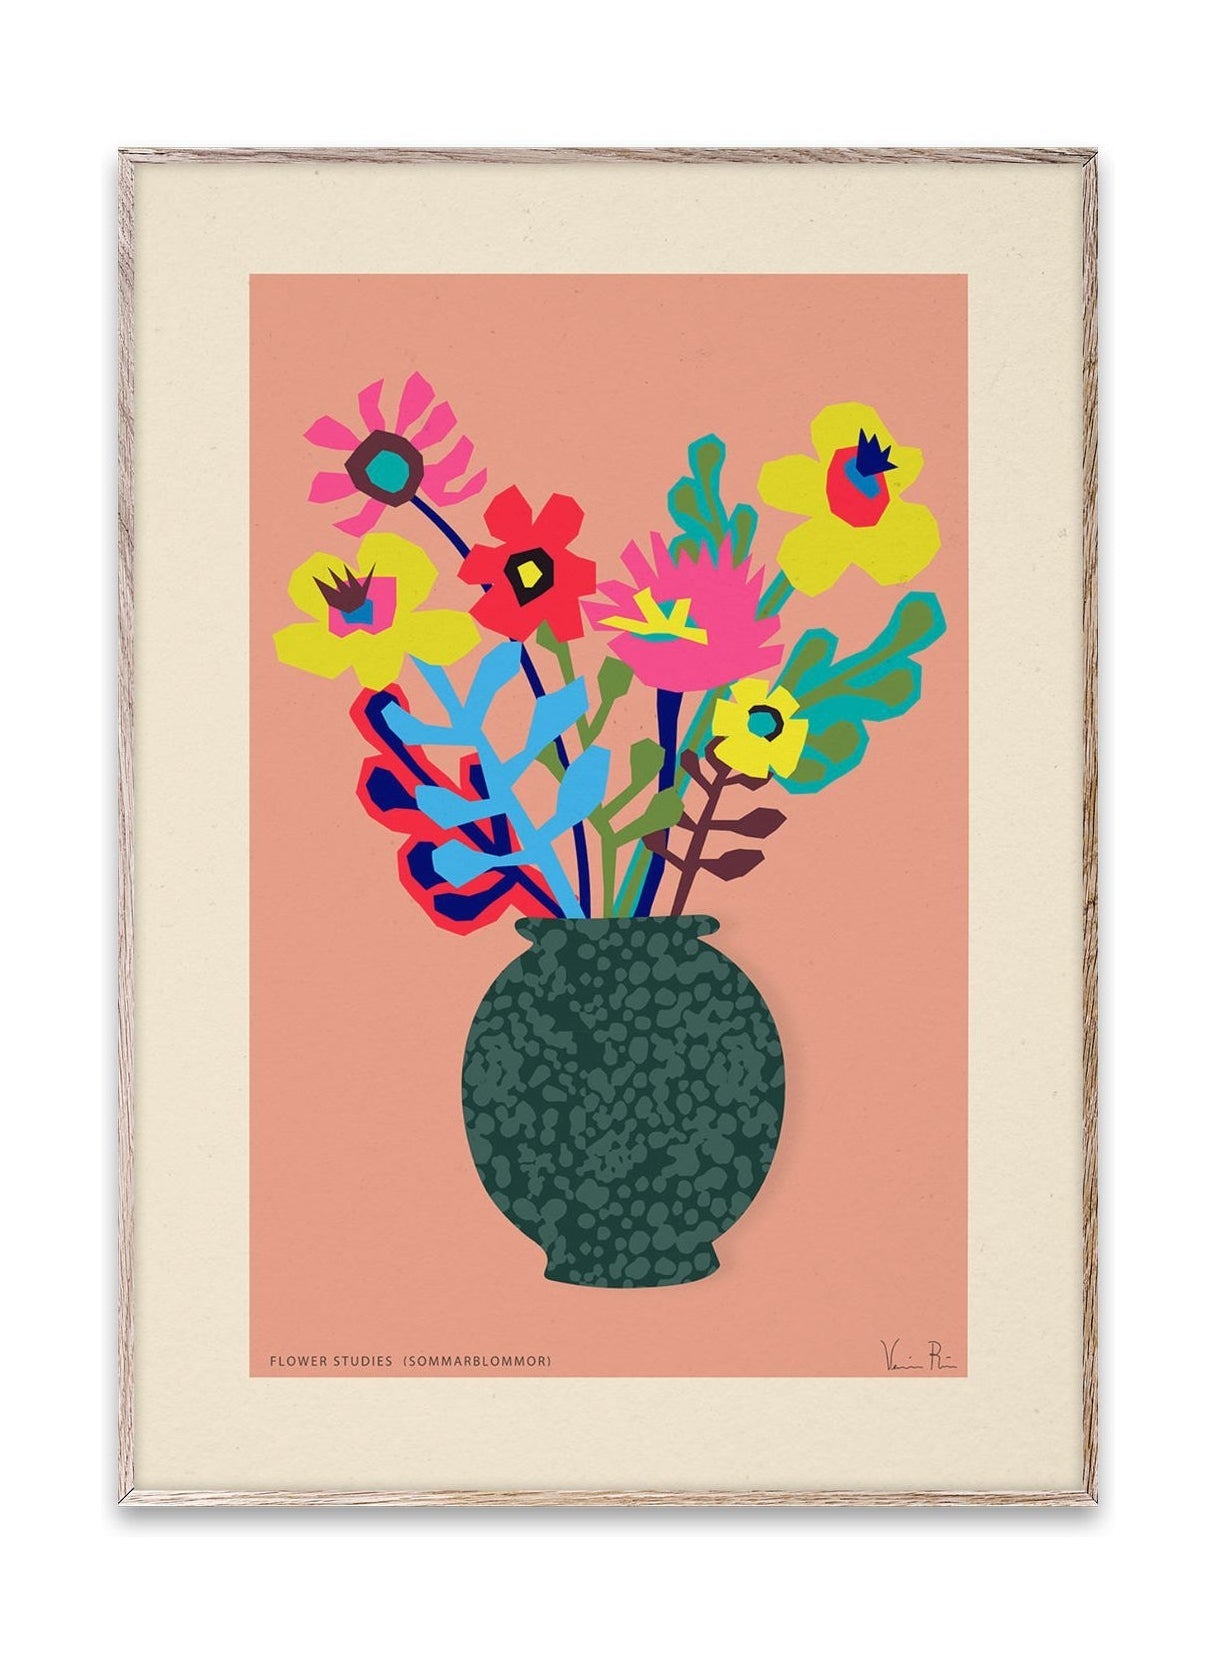 Paper Collective Flower Studies 02 (Sommarblommar) Poster, 50x70 Cm